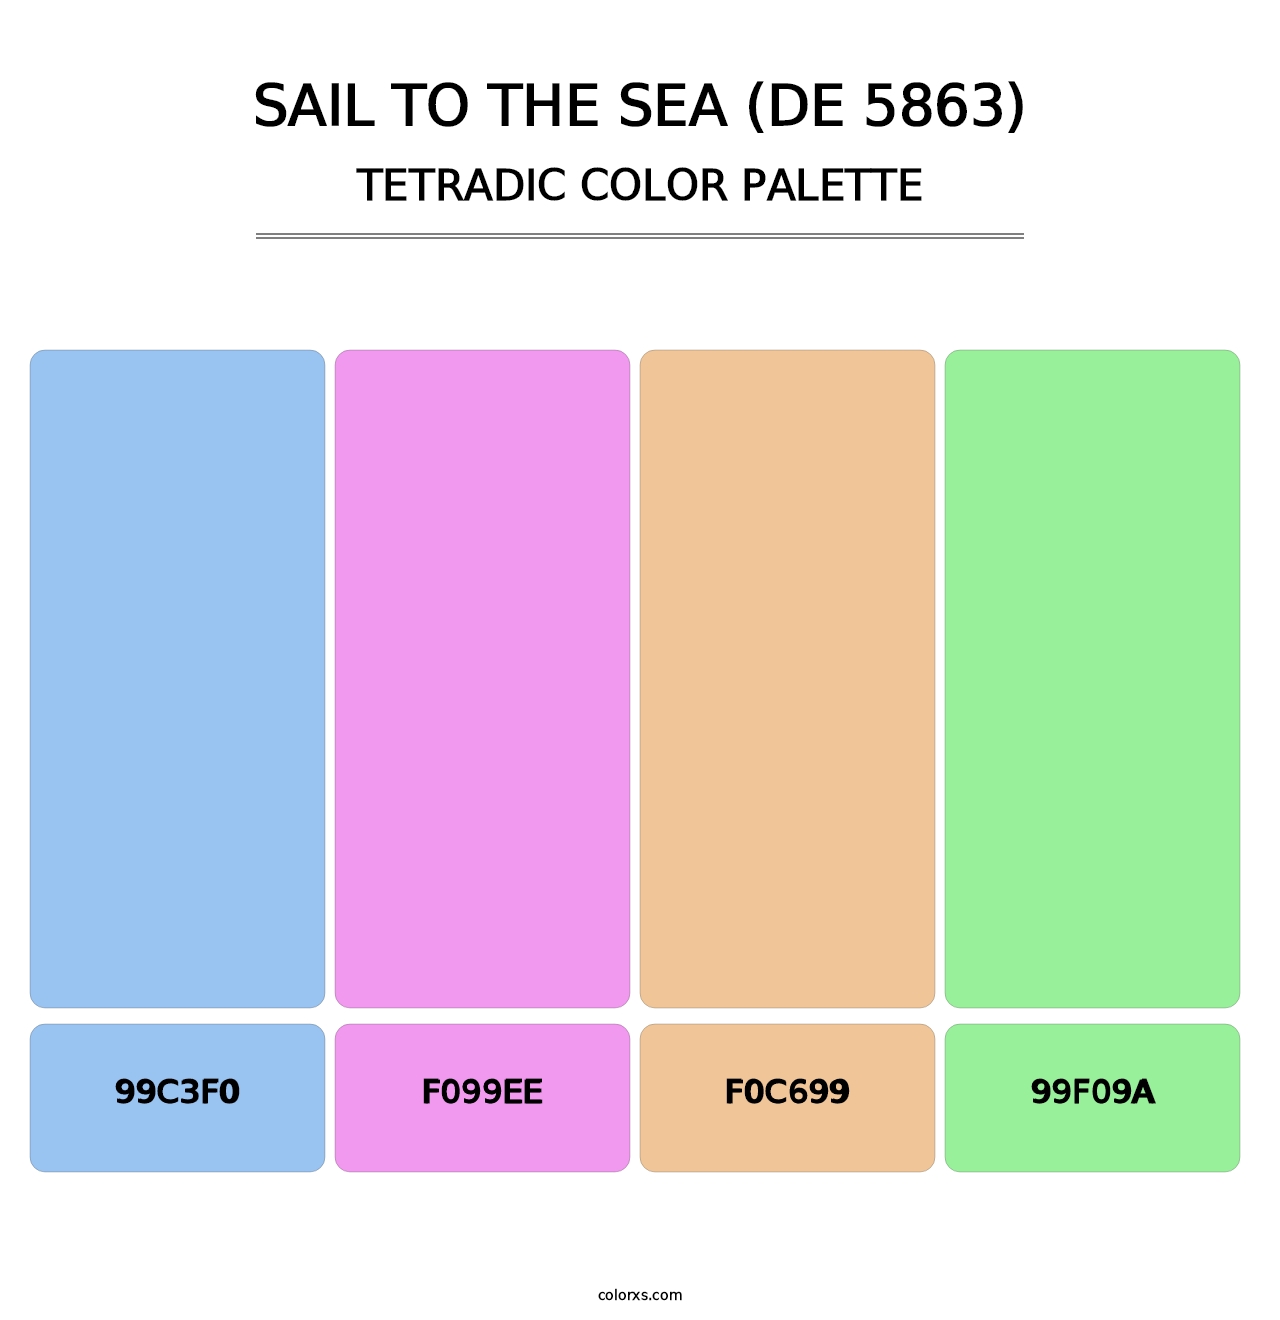 Sail to the Sea (DE 5863) - Tetradic Color Palette